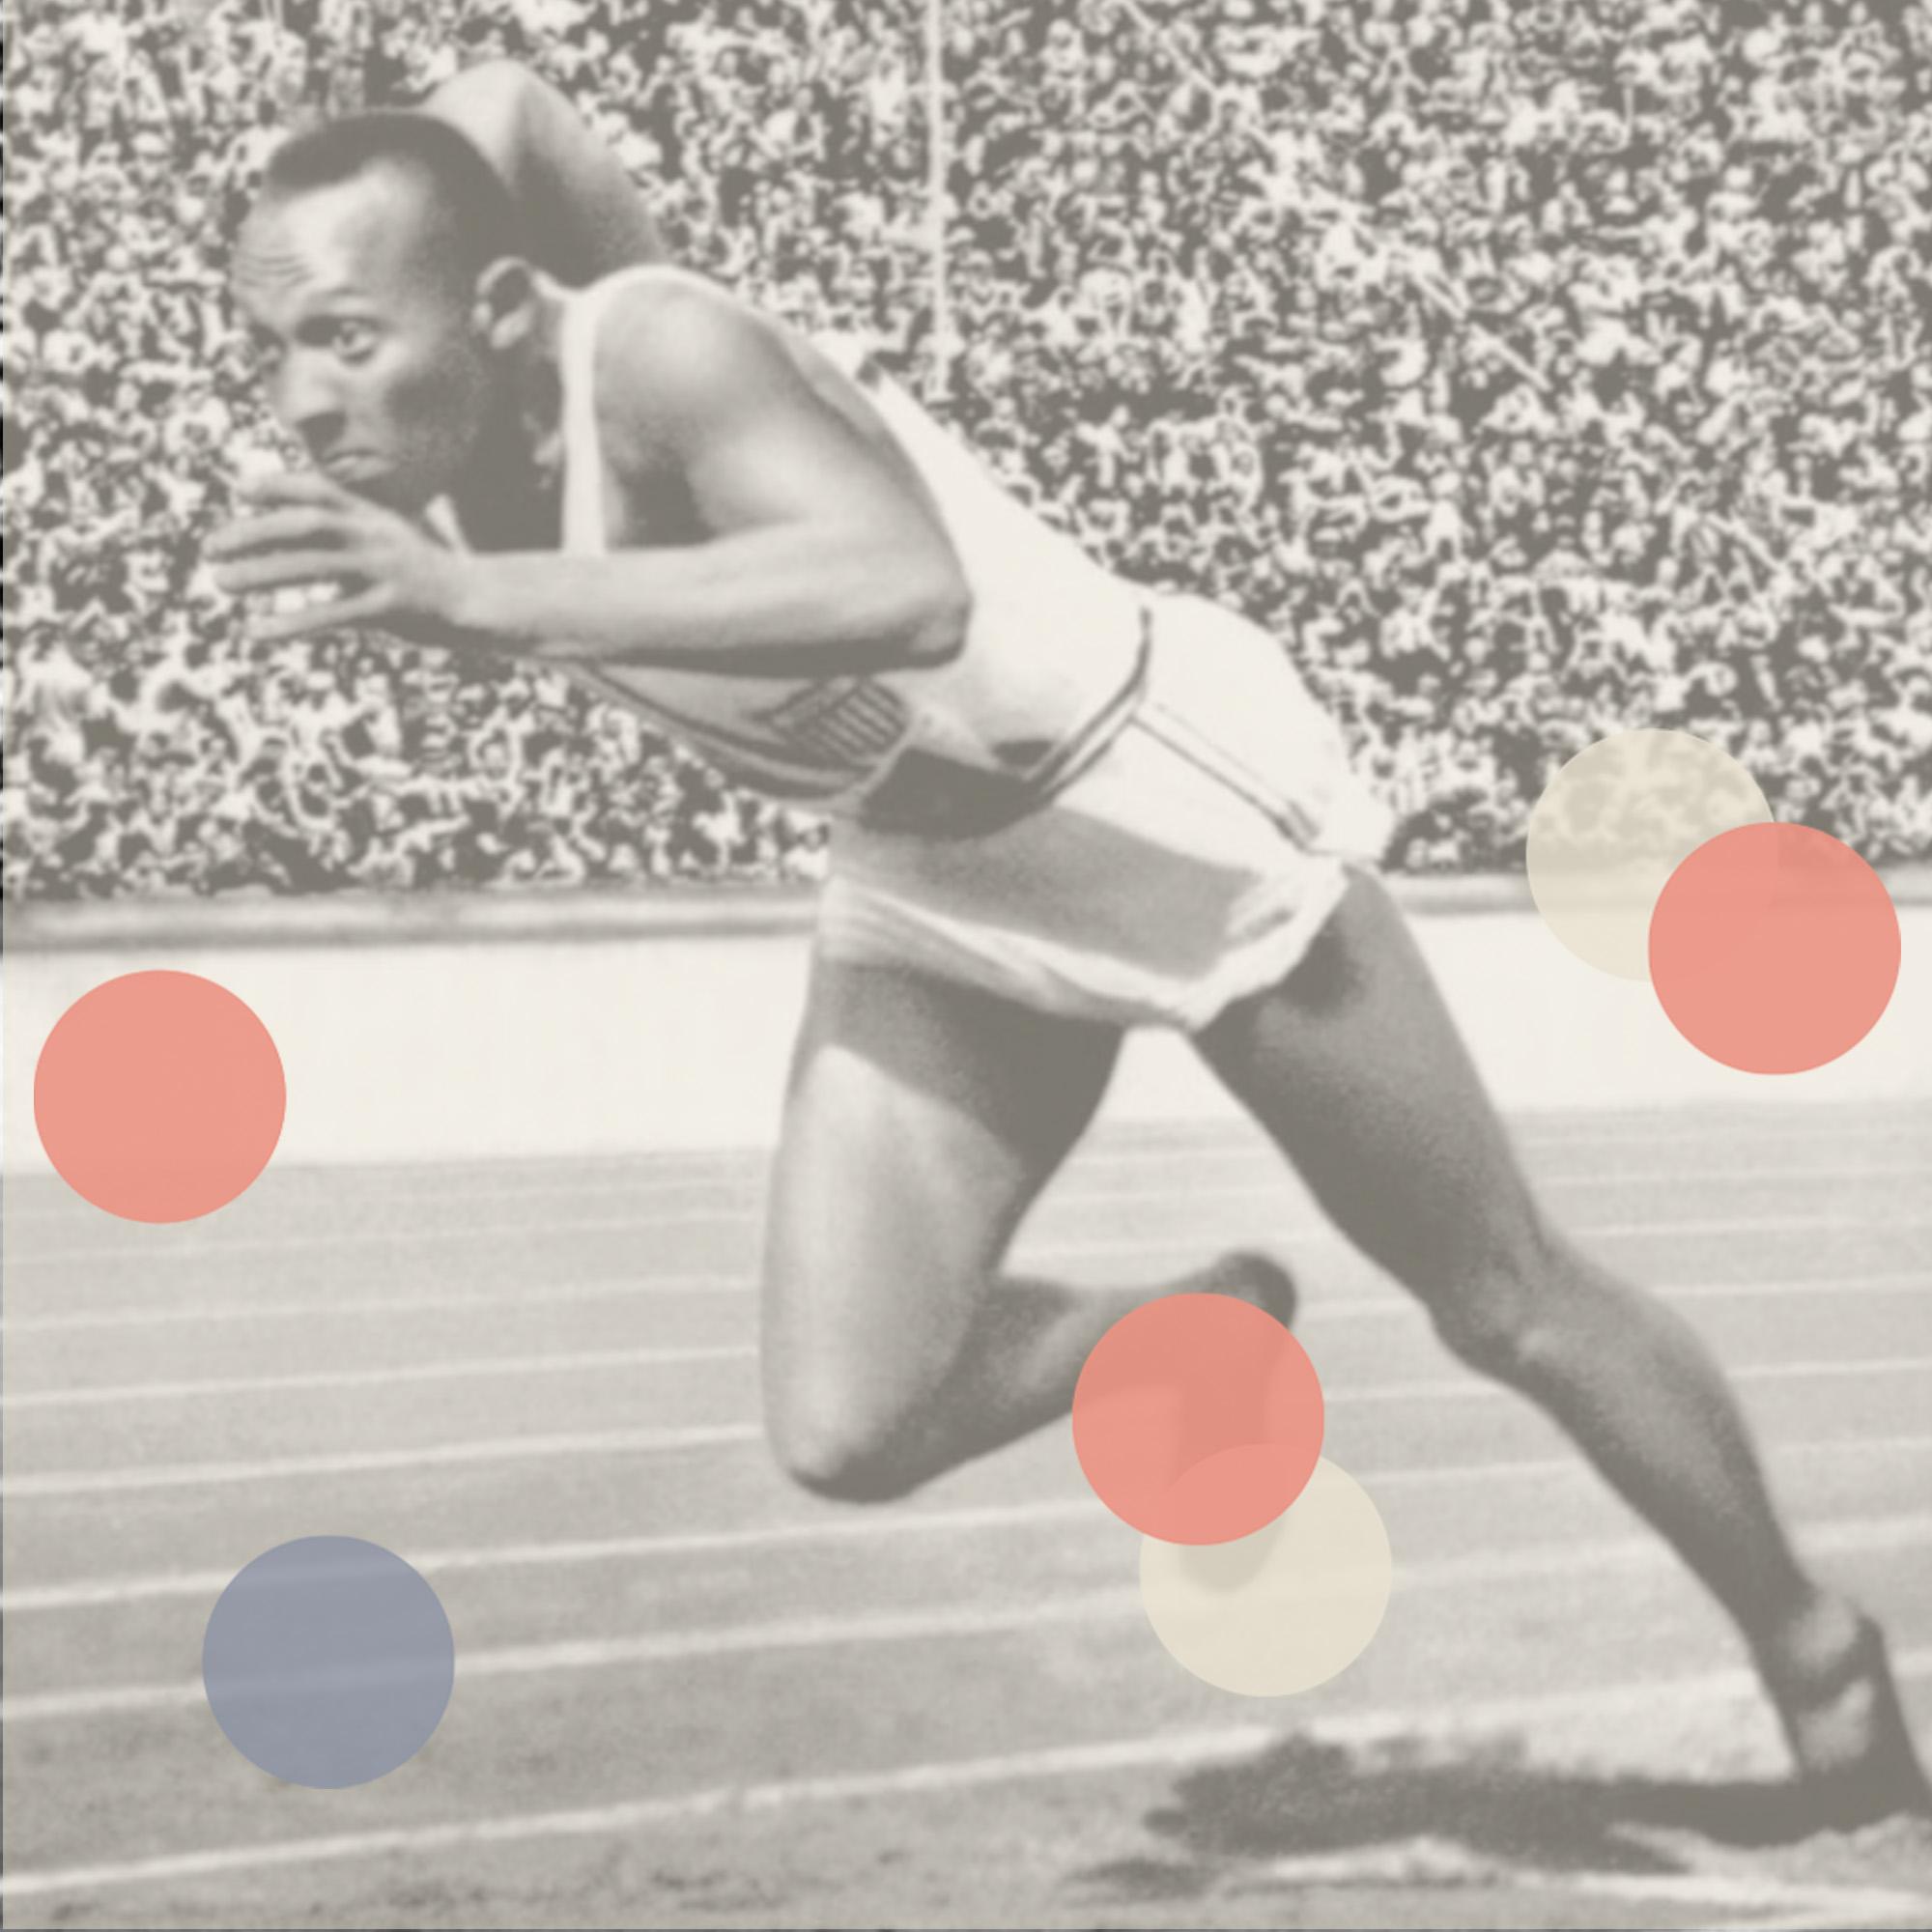 Thumbnail for "Jesse Owens v Hitler, Behind The Scenes (1936)".